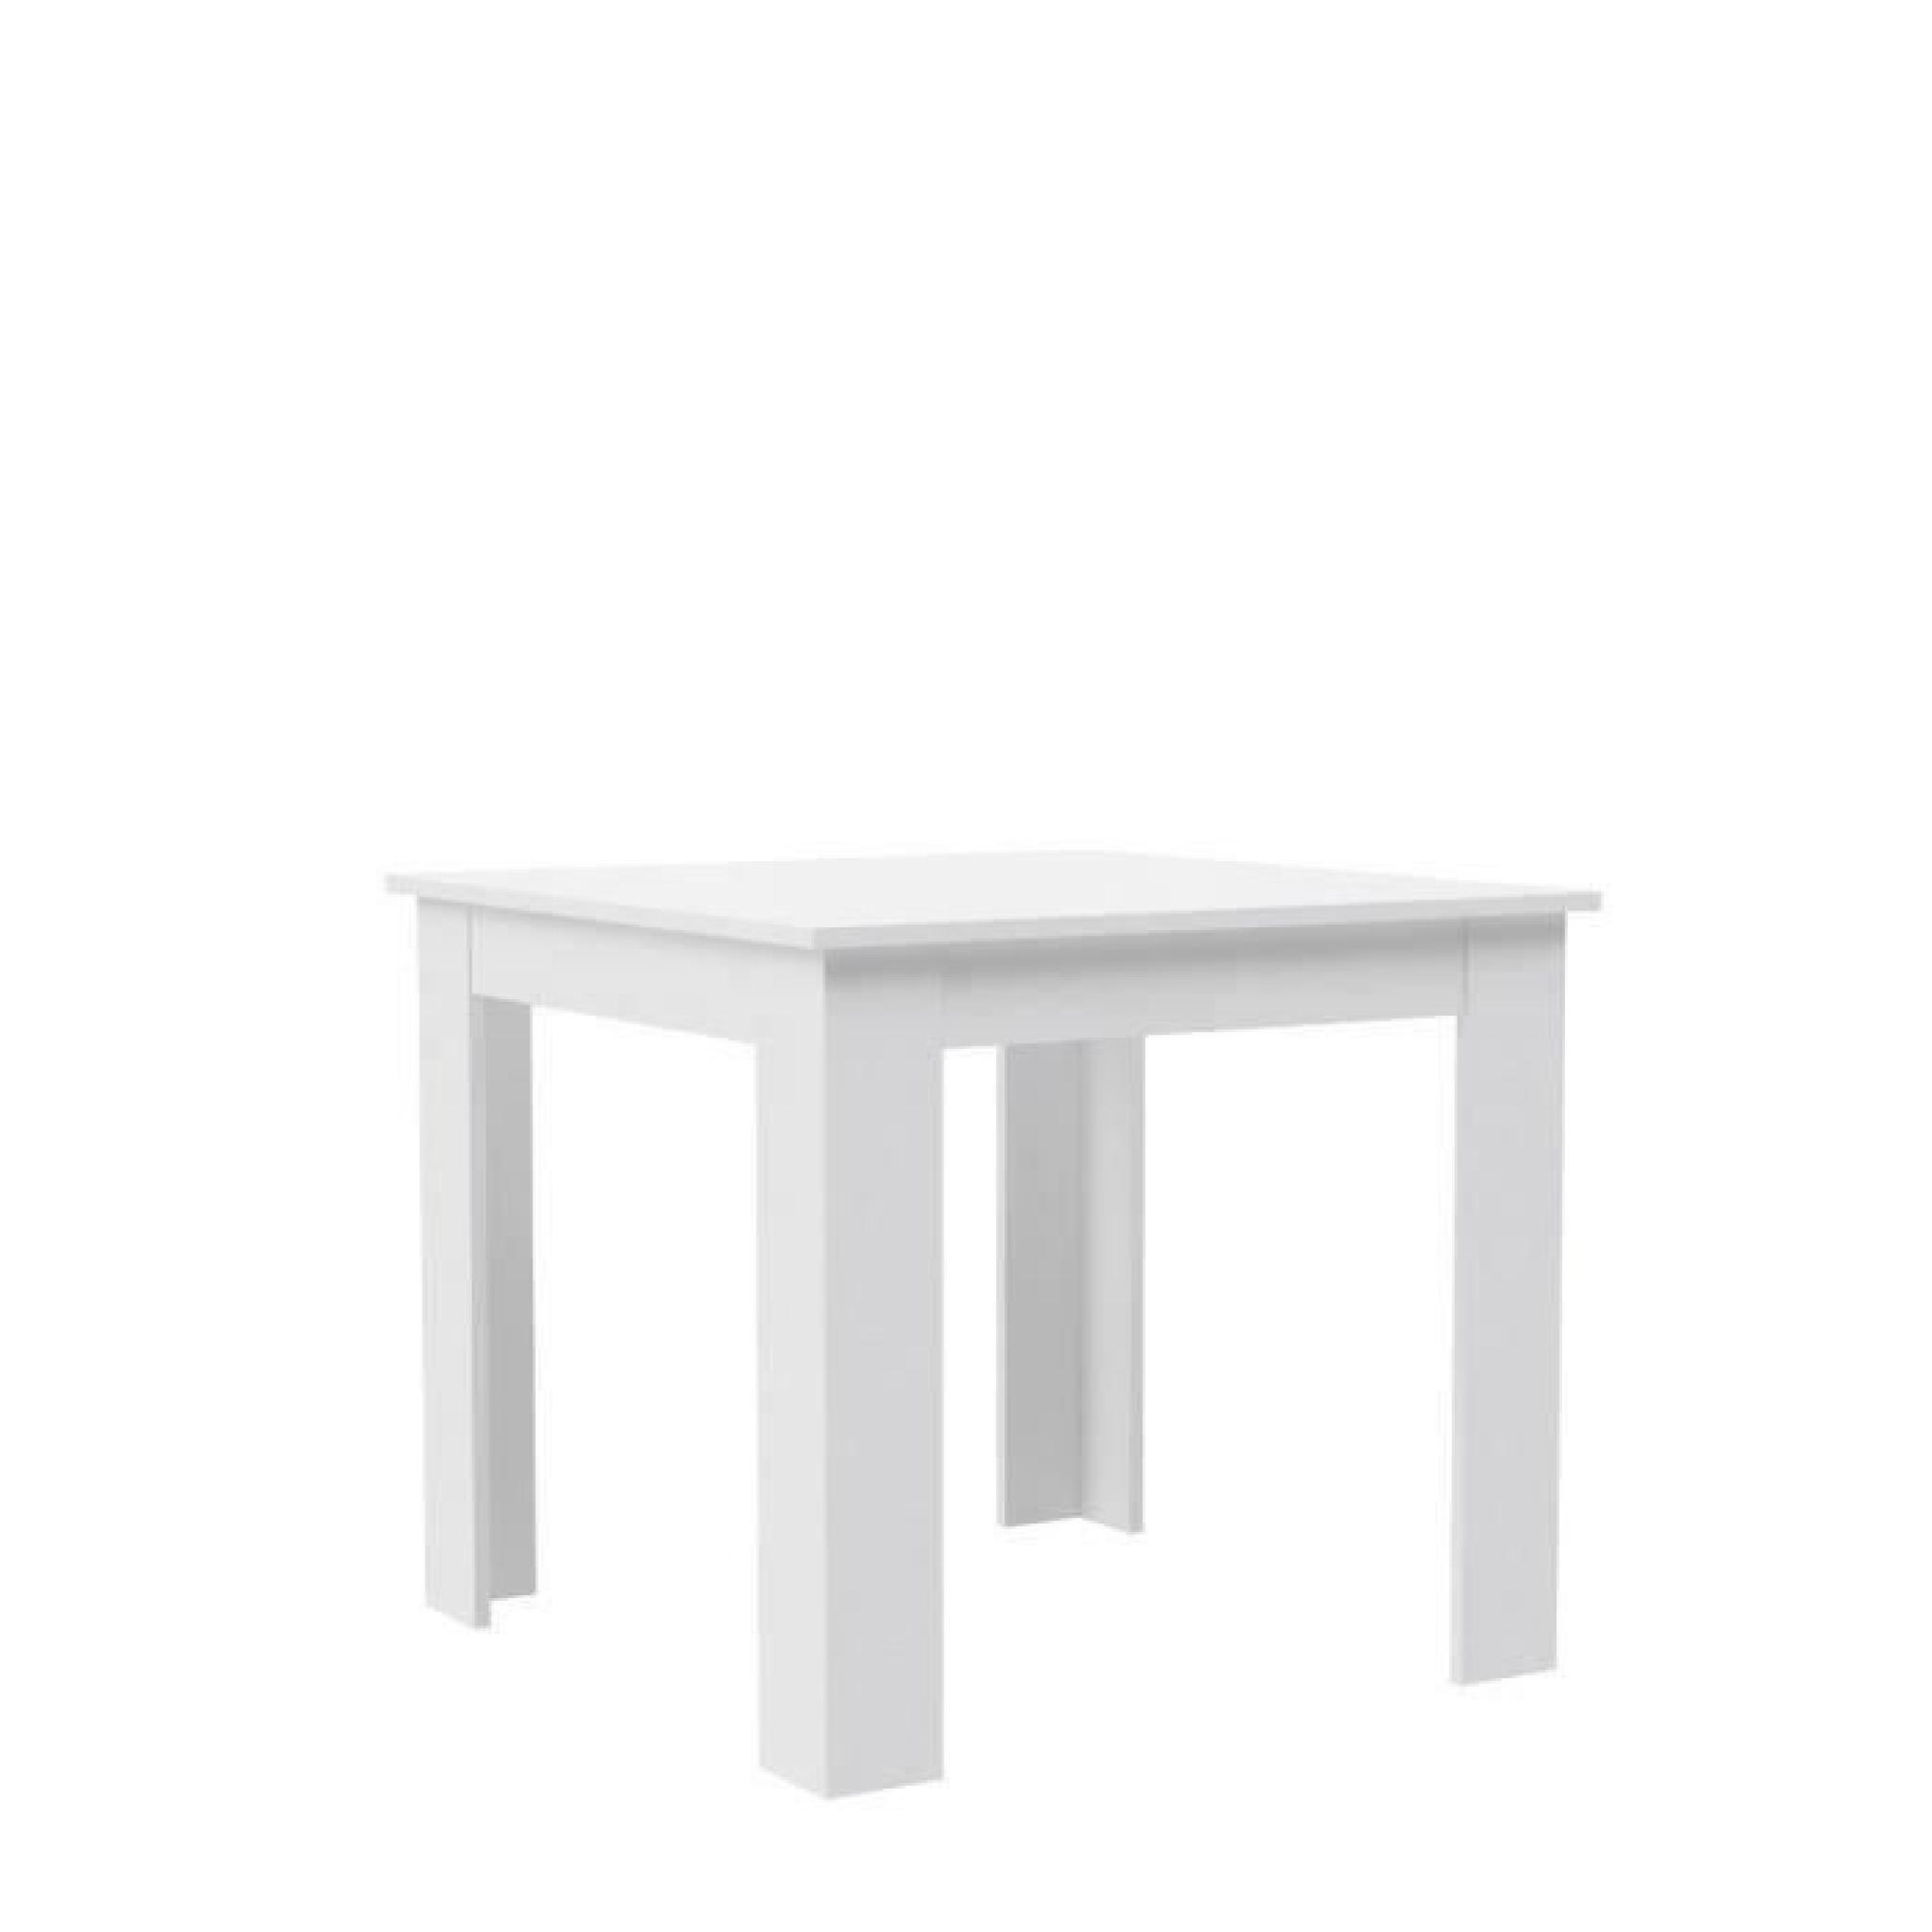 FINLANDEK Table de bar TIETTI 110x110x95 cm - Blanc mat pas cher